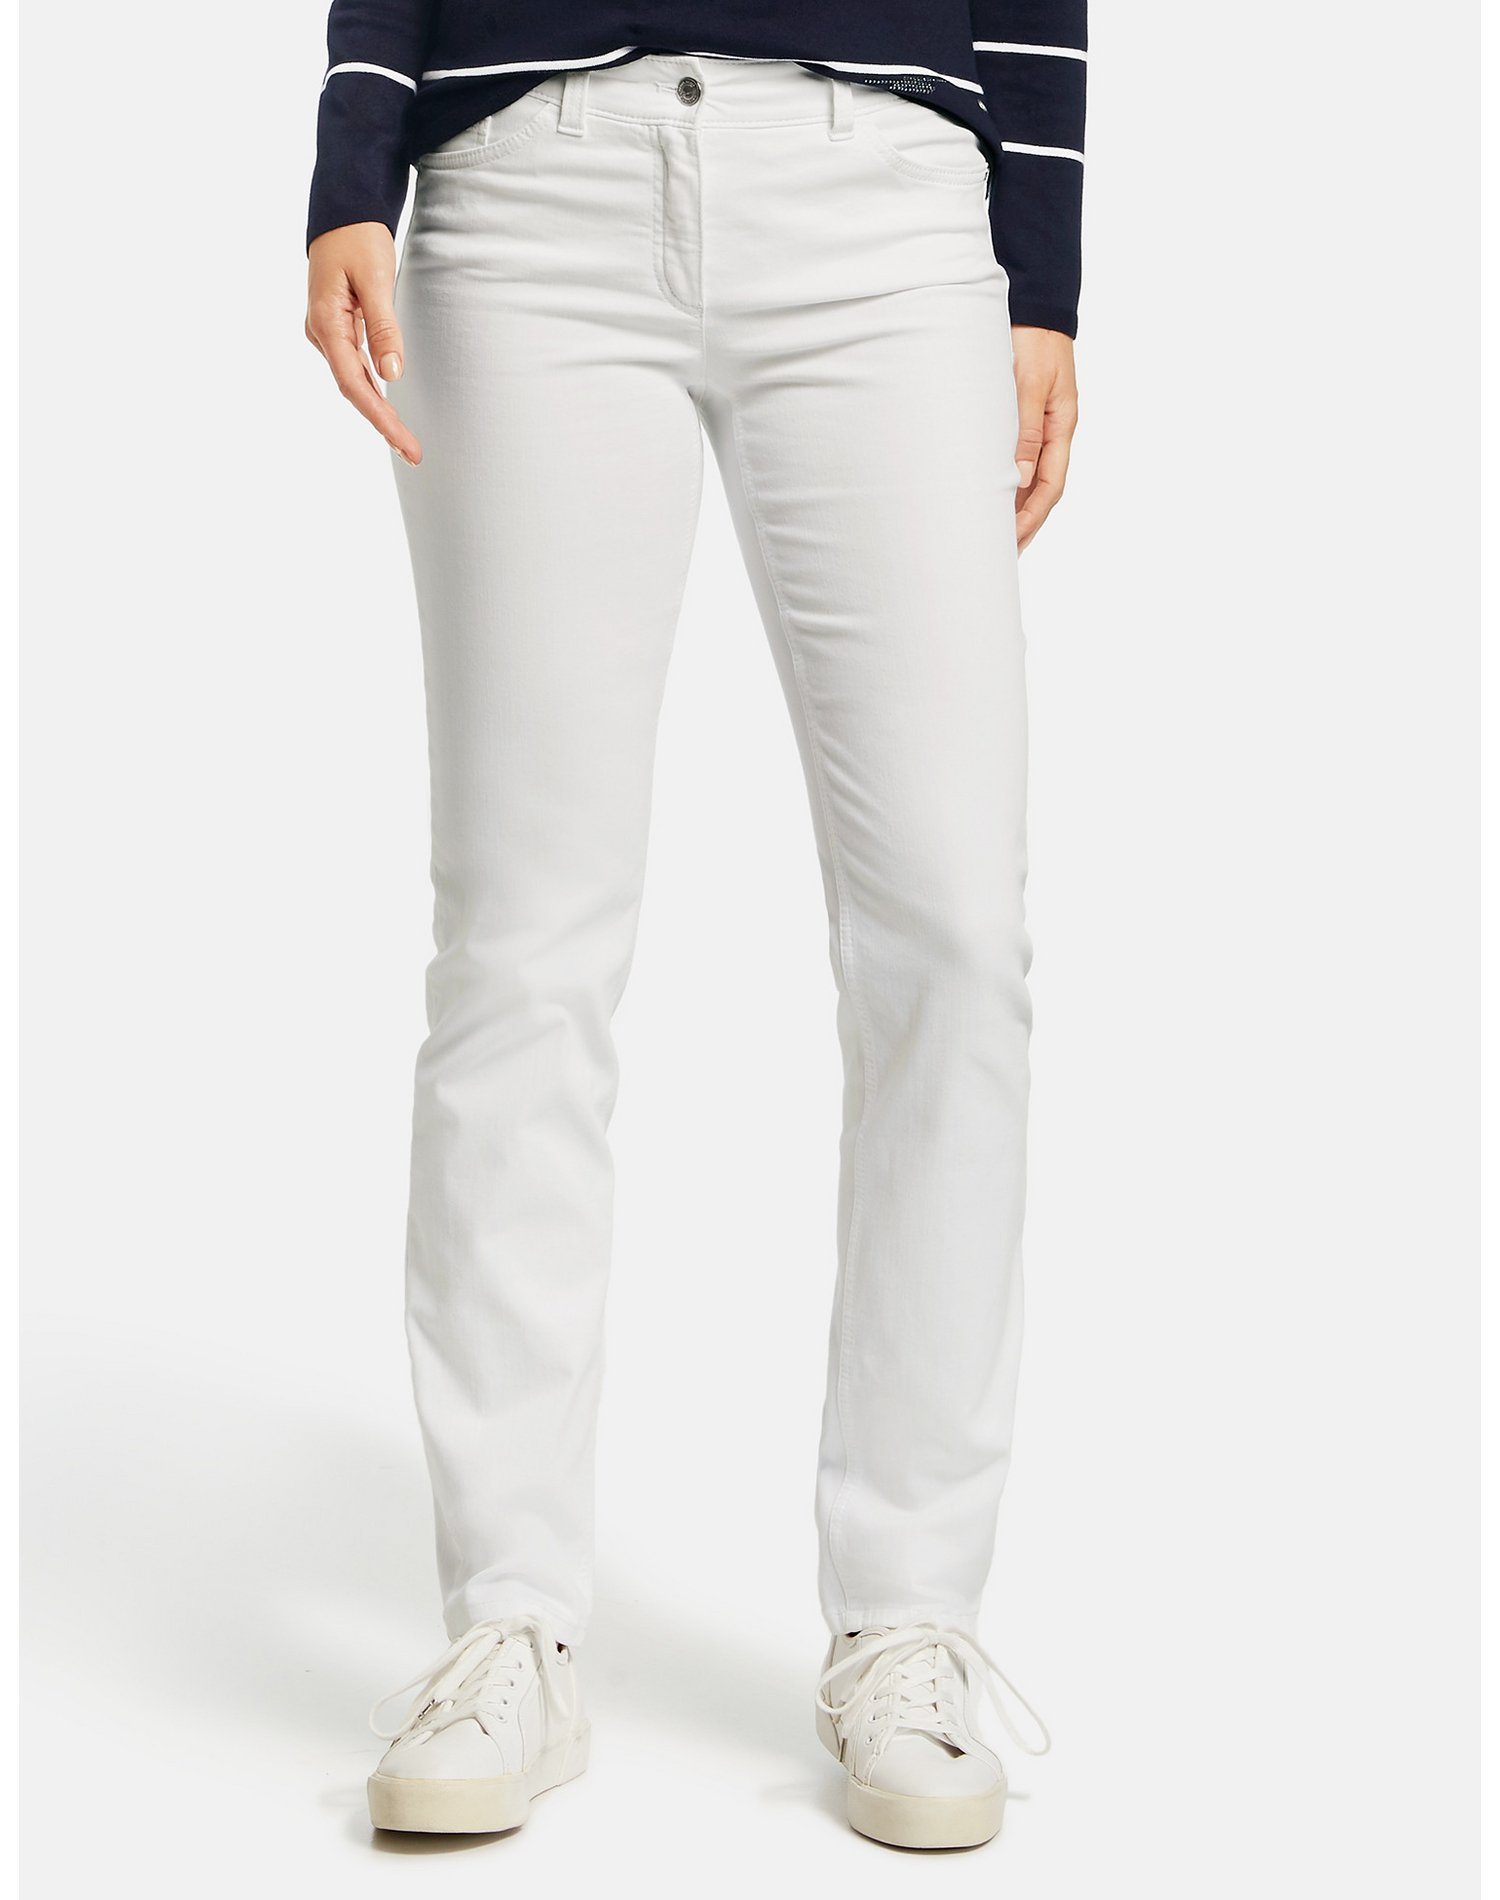 GERRY WEBER Stretch-Jeans Figurformende Hose Best4me 5-Pocket weiß/weiß